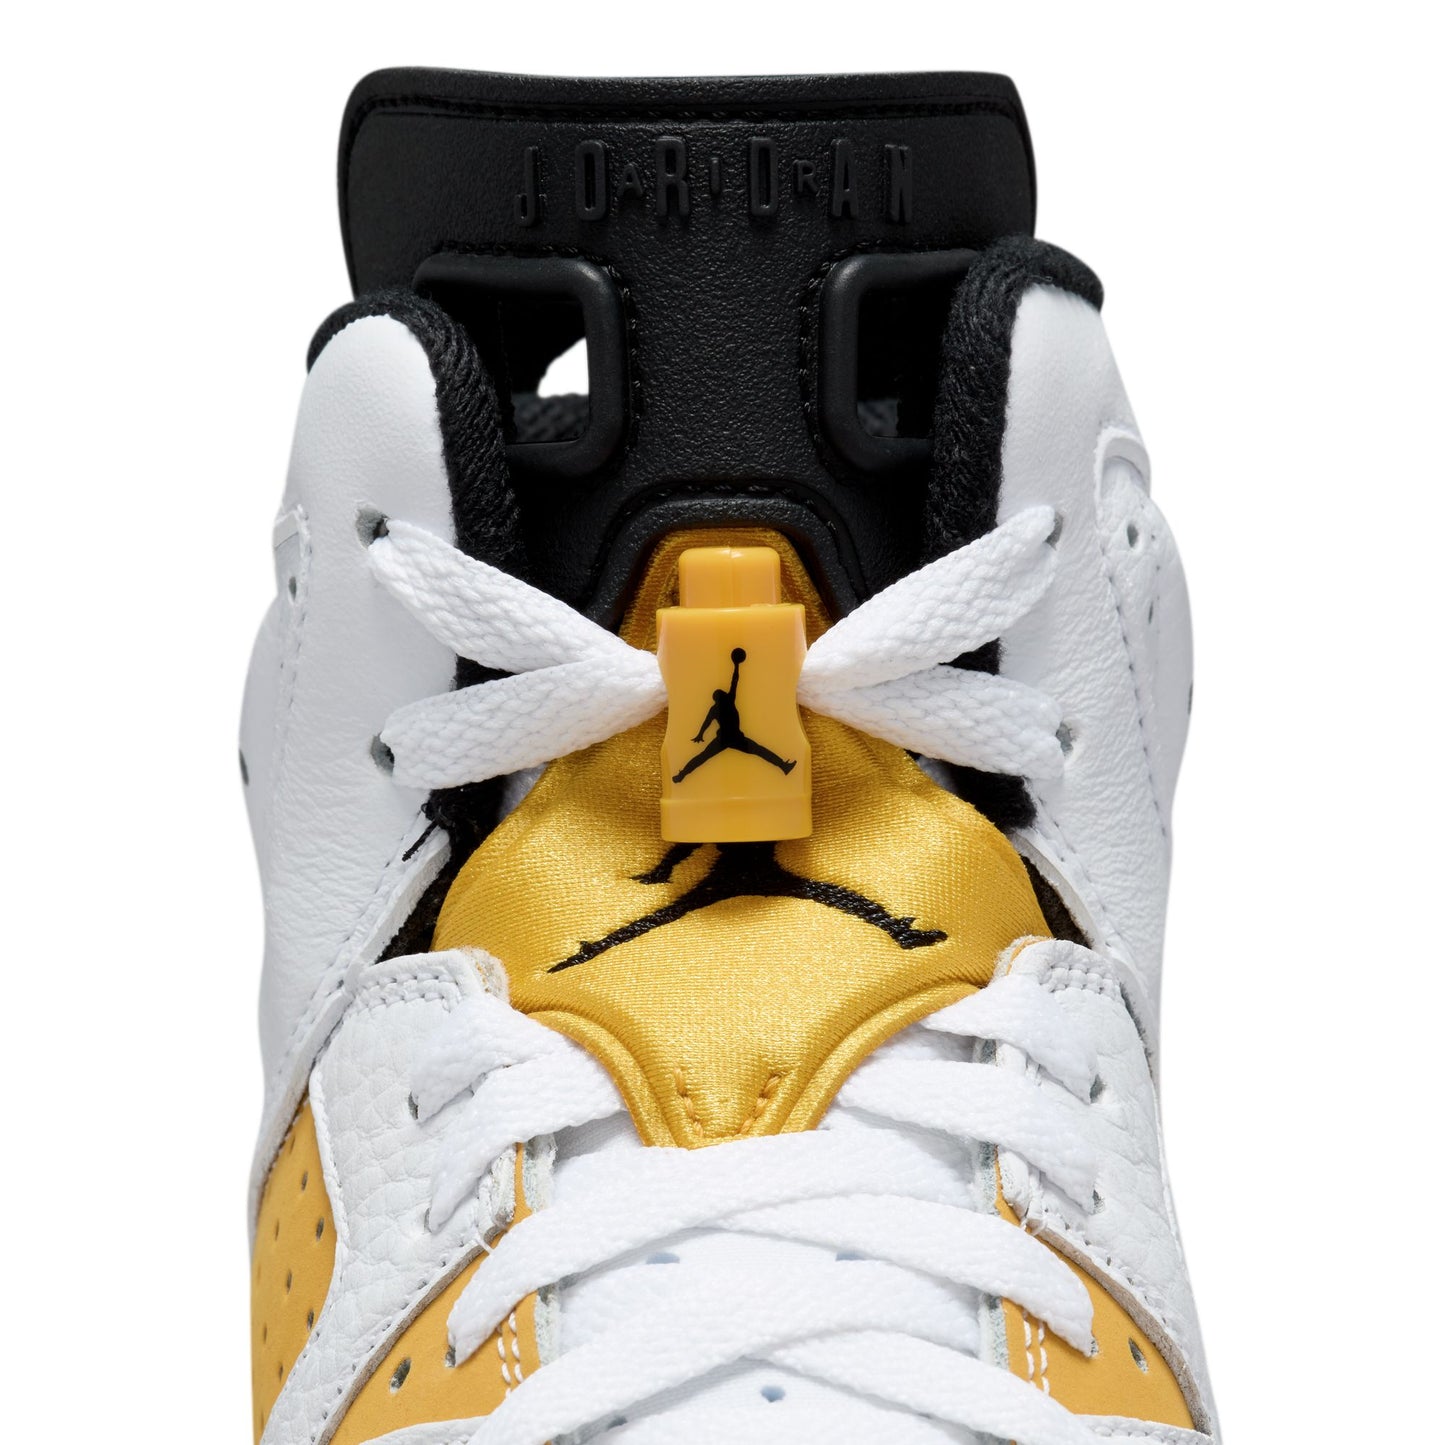 Big Kid's Air Jordan 6 Retro - "Yellow Ochre"